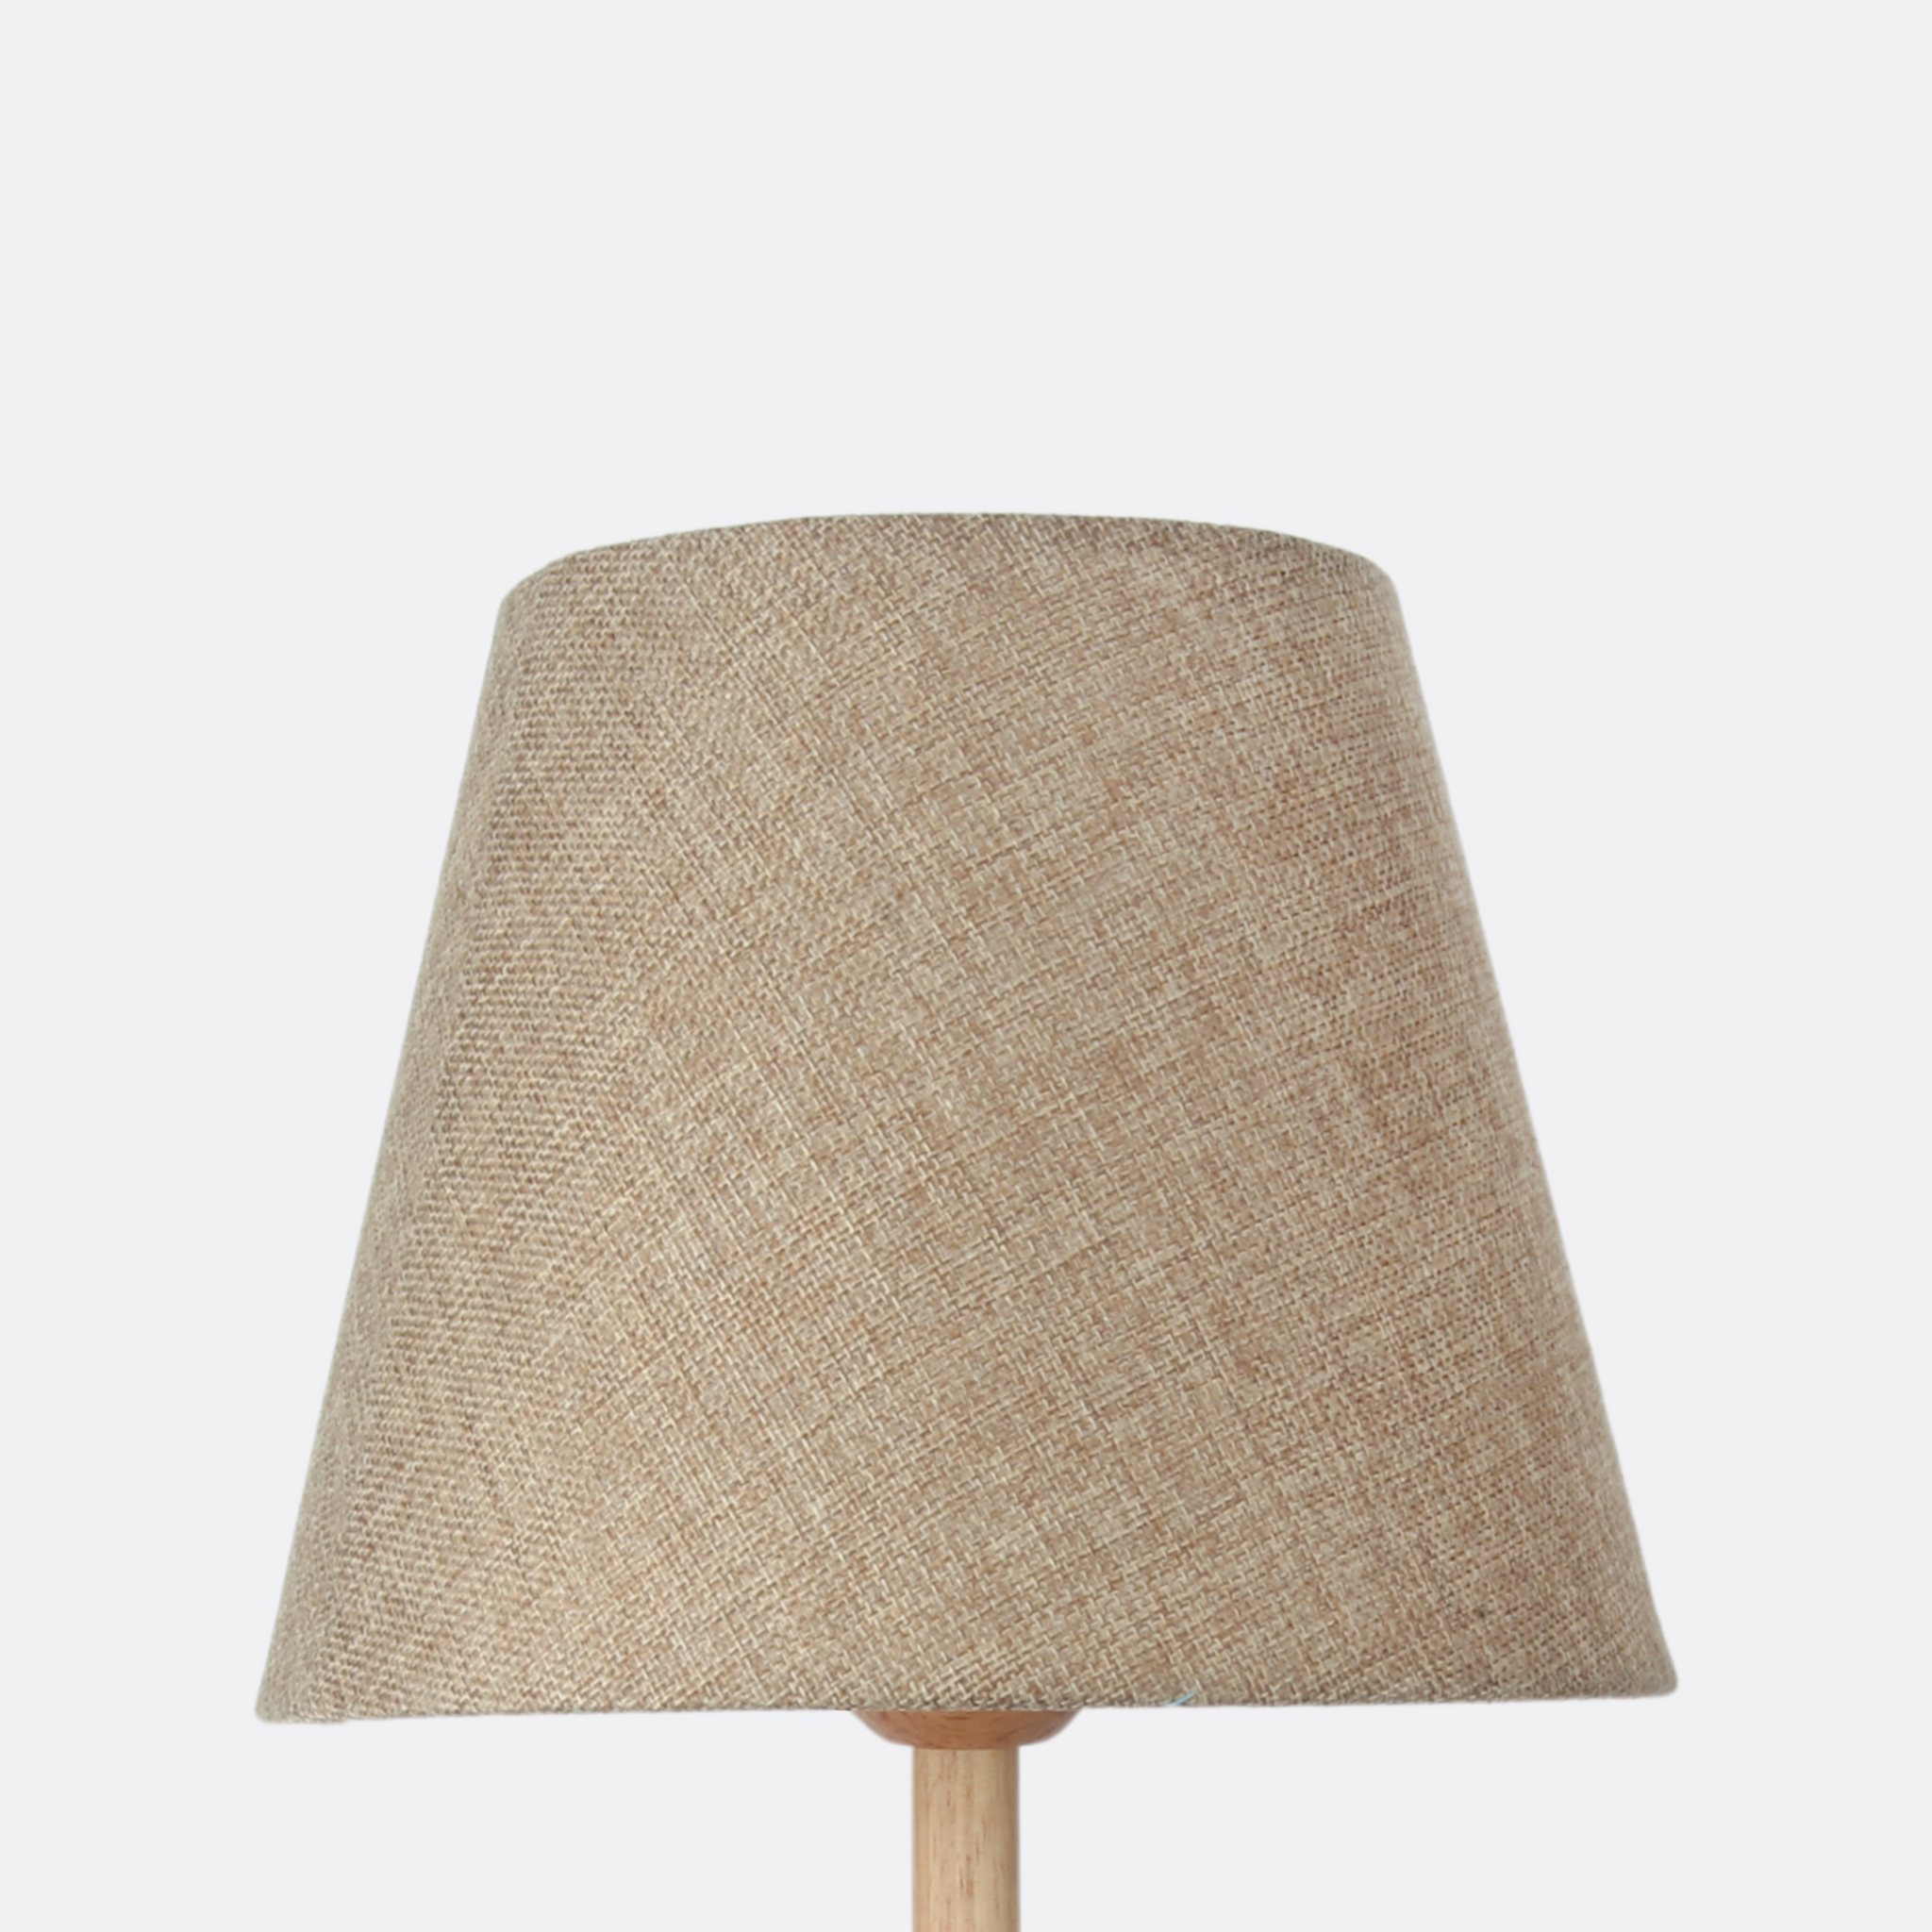 Tripod Wooden Lamp